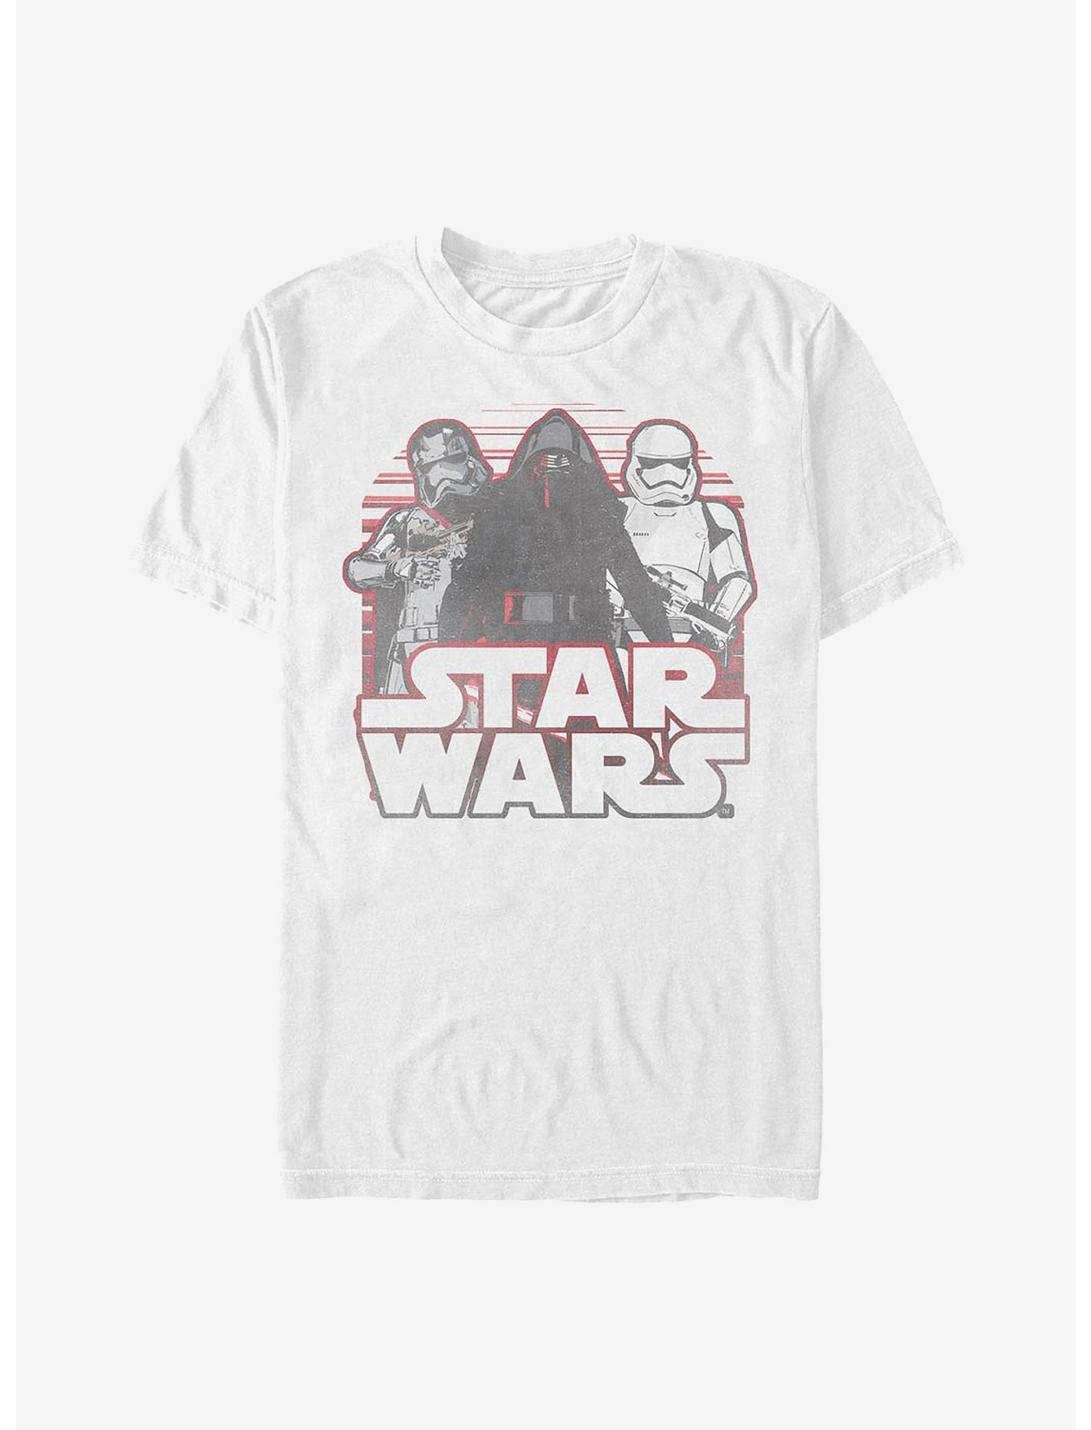 Star Wars: The Force Awakens Onwards T-Shirt, WHITE, hi-res